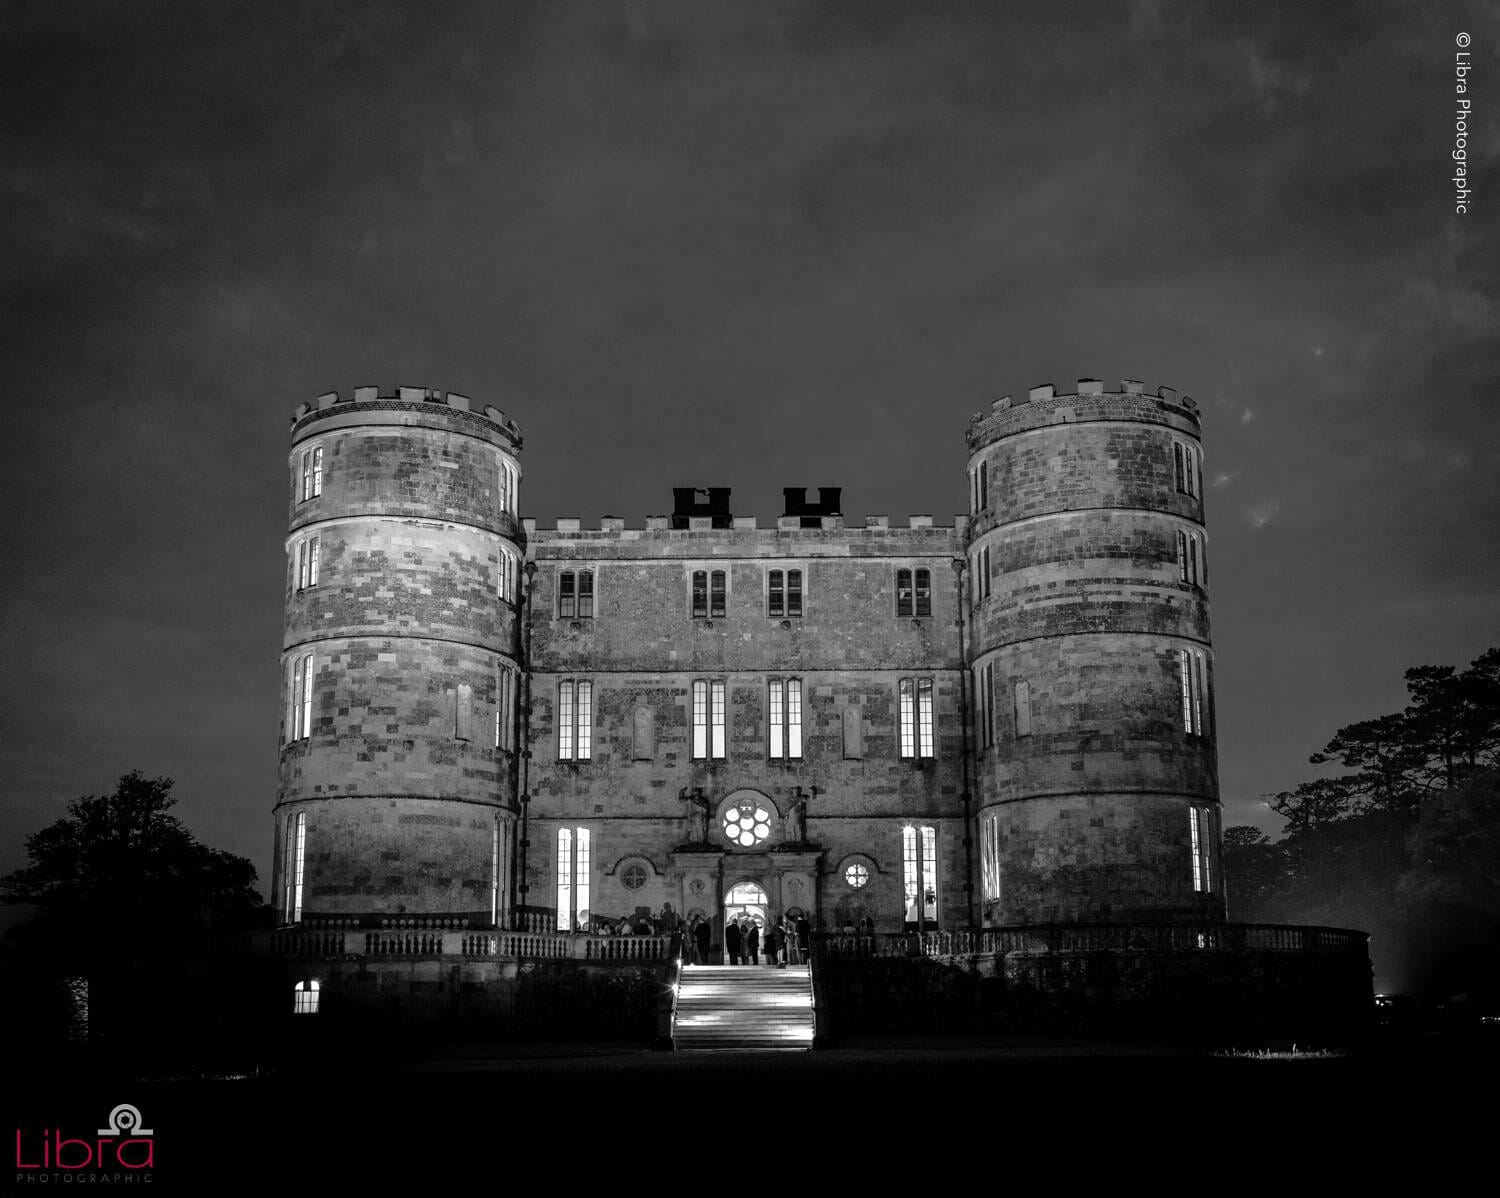 Lulworth Castle at night